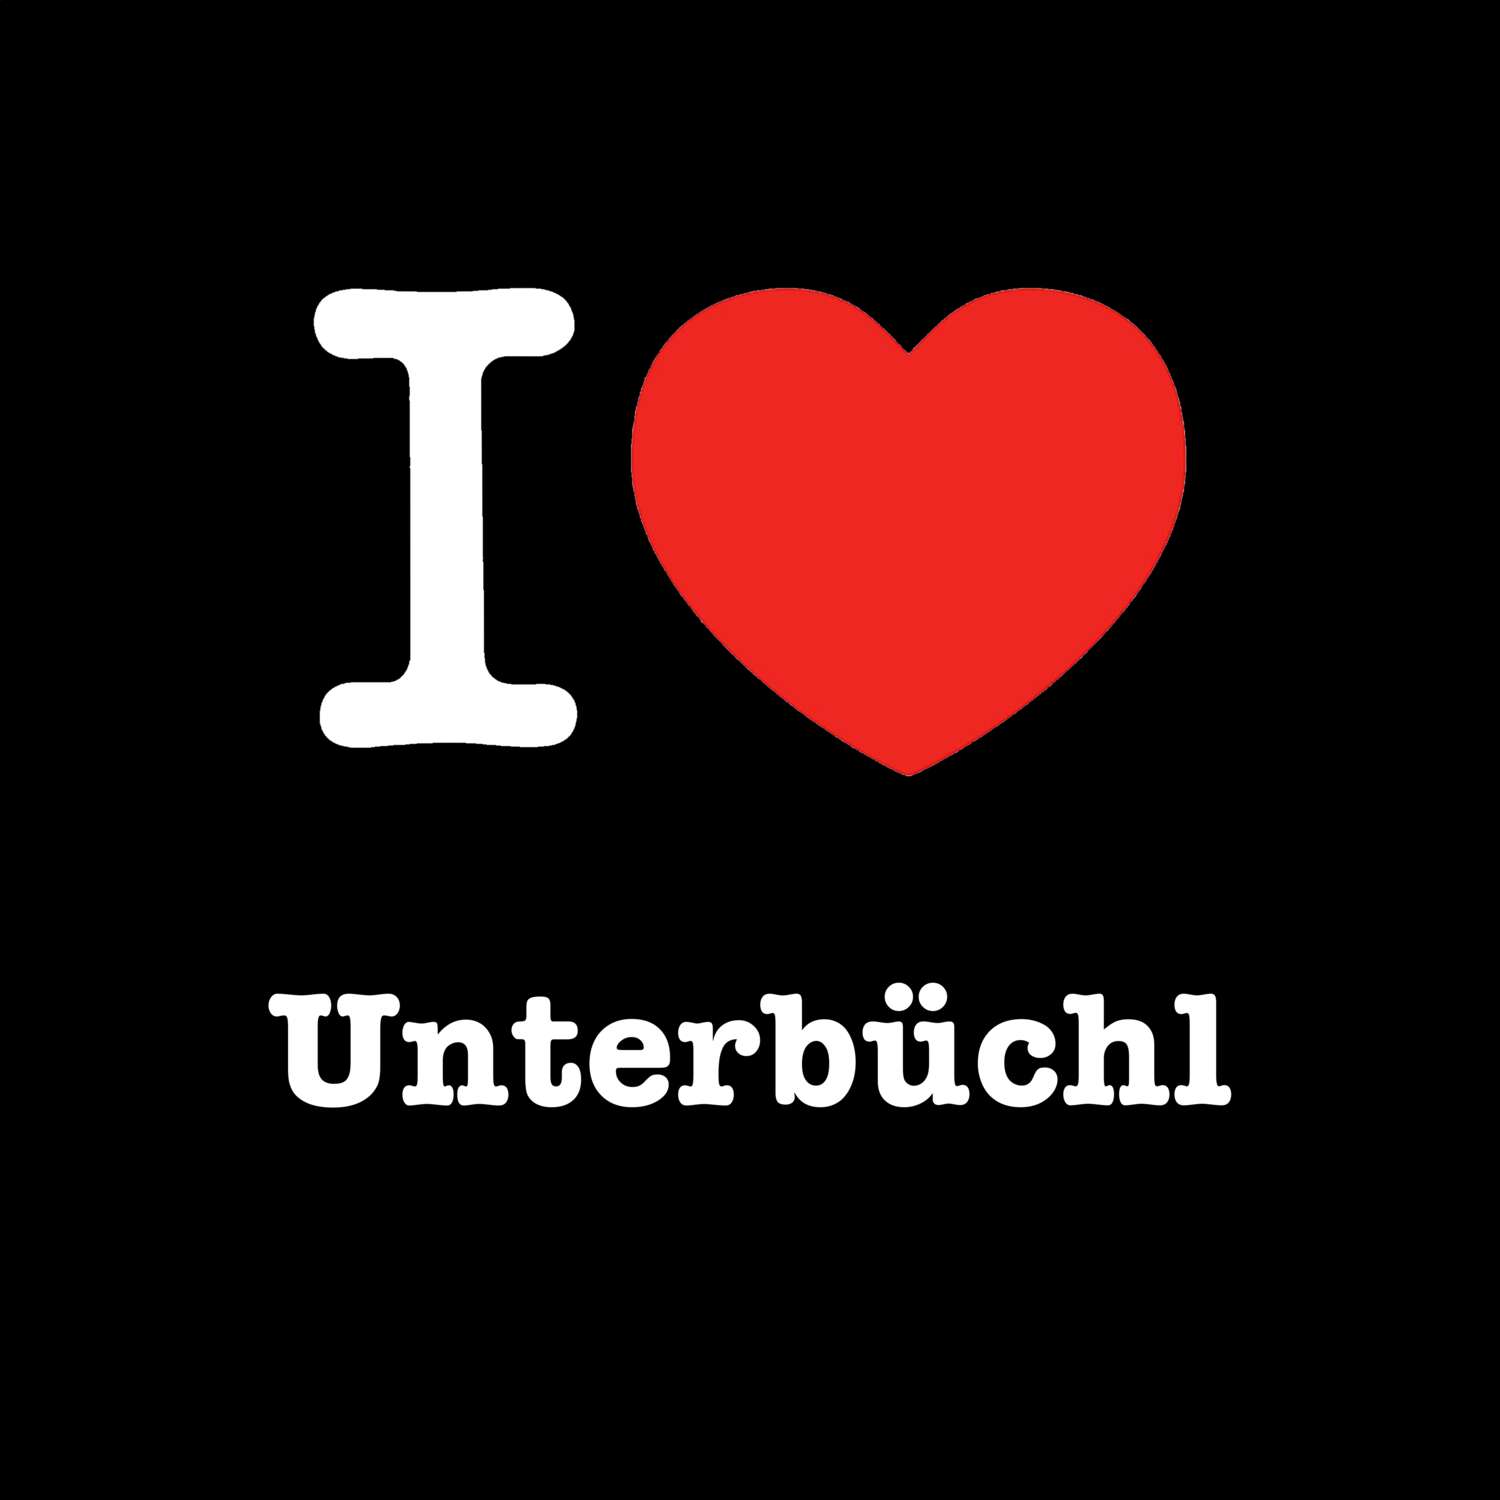 Unterbüchl T-Shirt »I love«